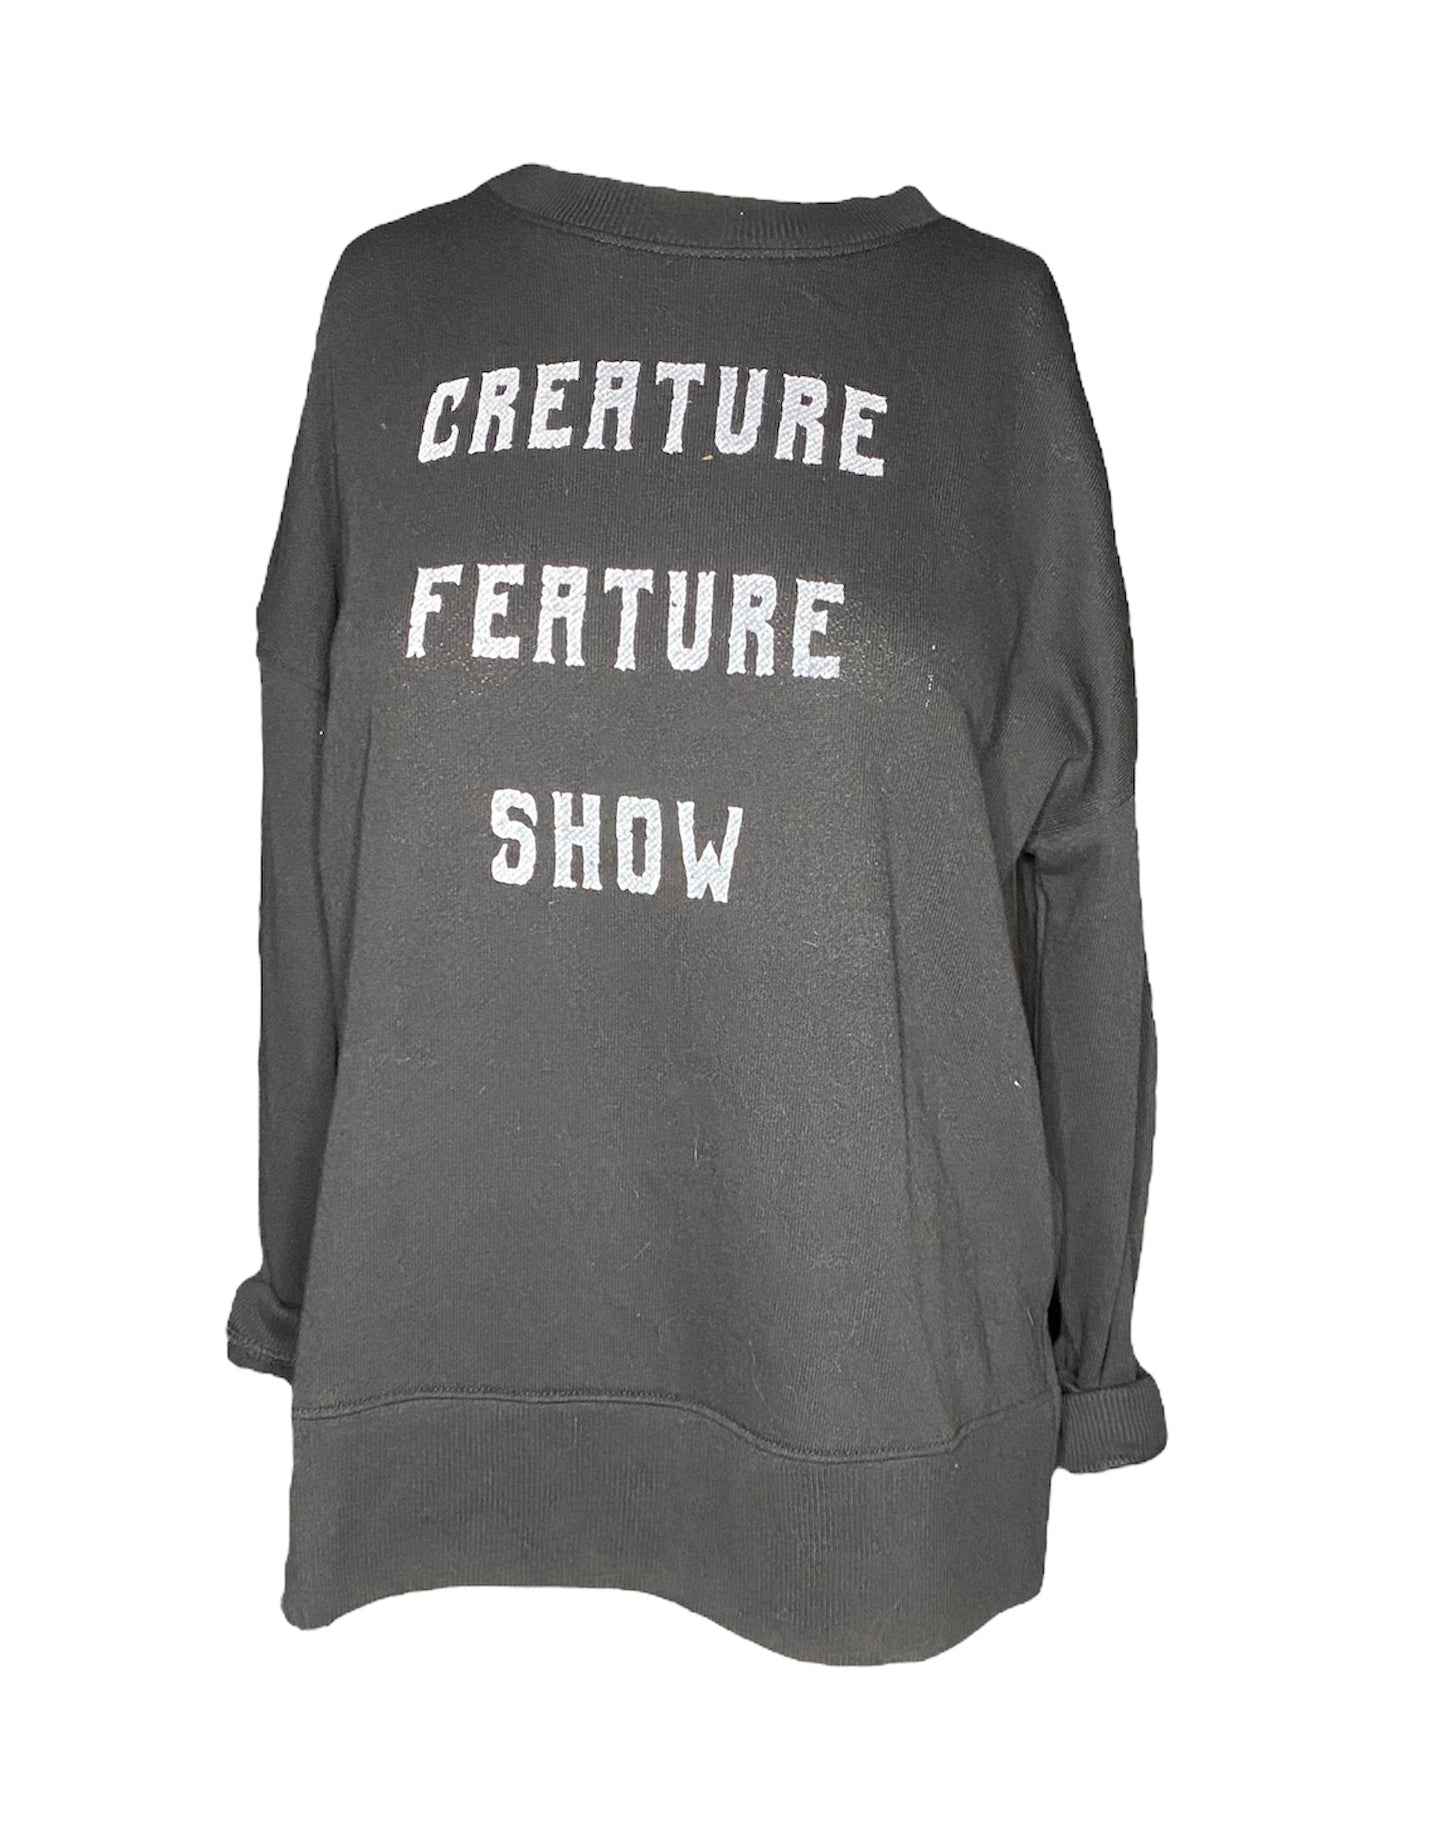 Creature Feature Show - Sweatshirt